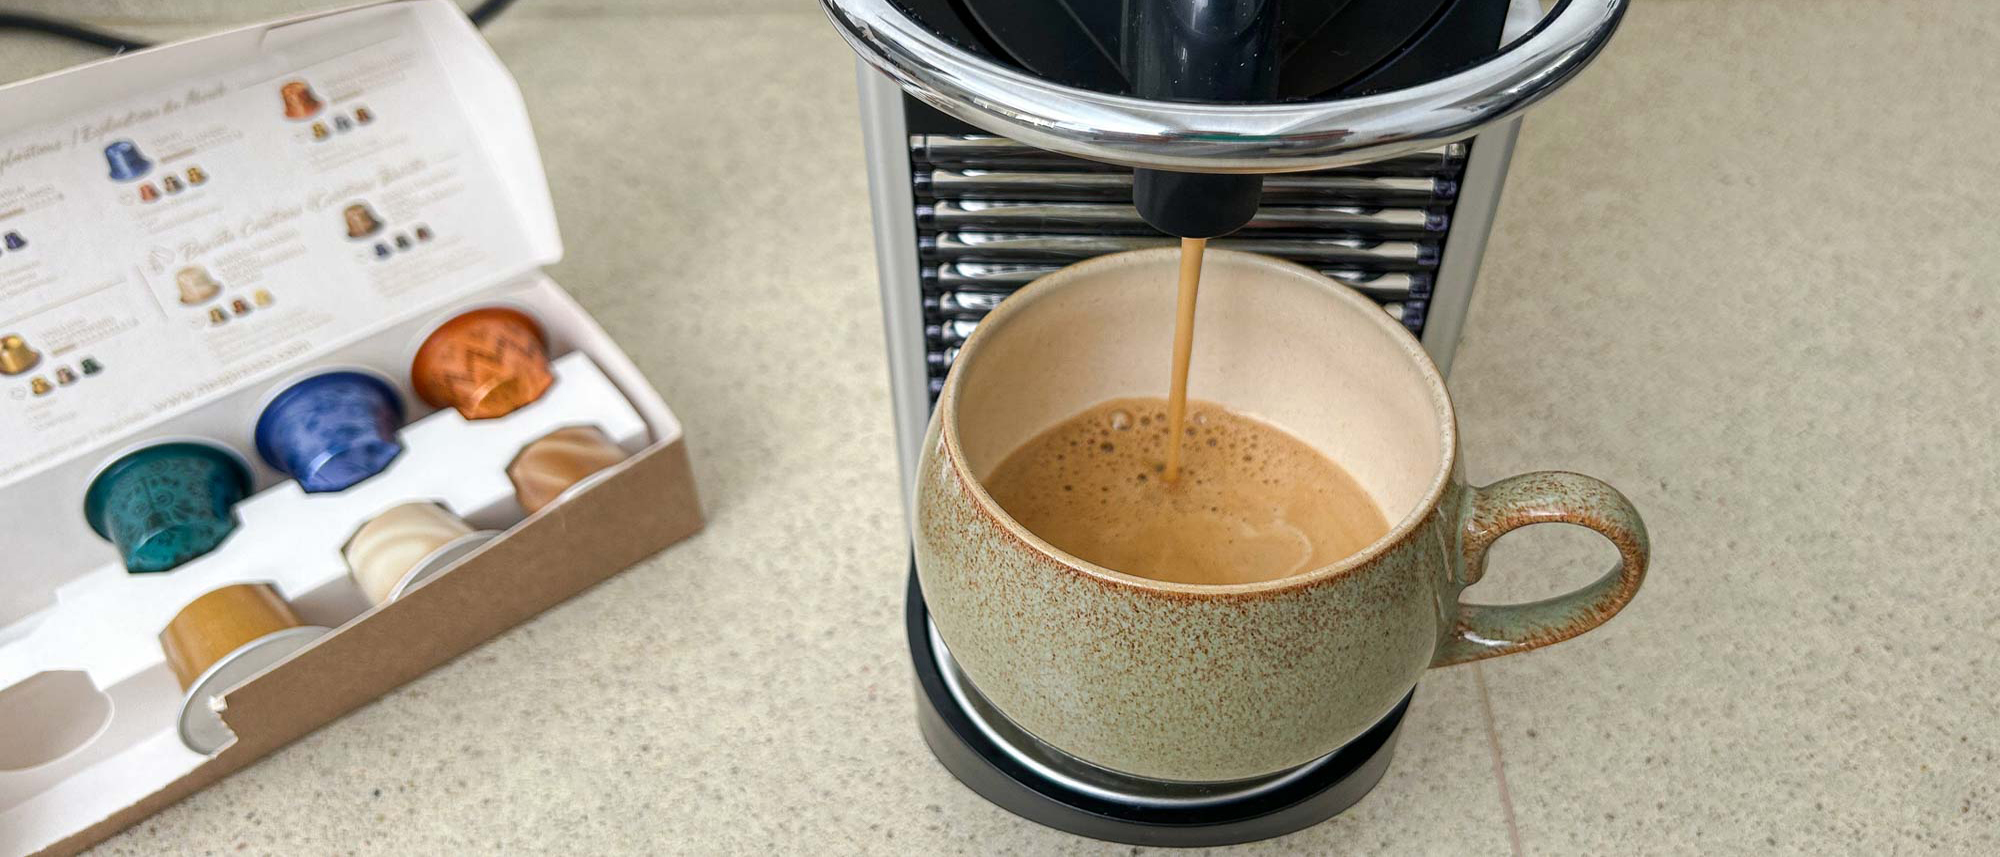 The best coffee maker 2019: Nespresso Pixie